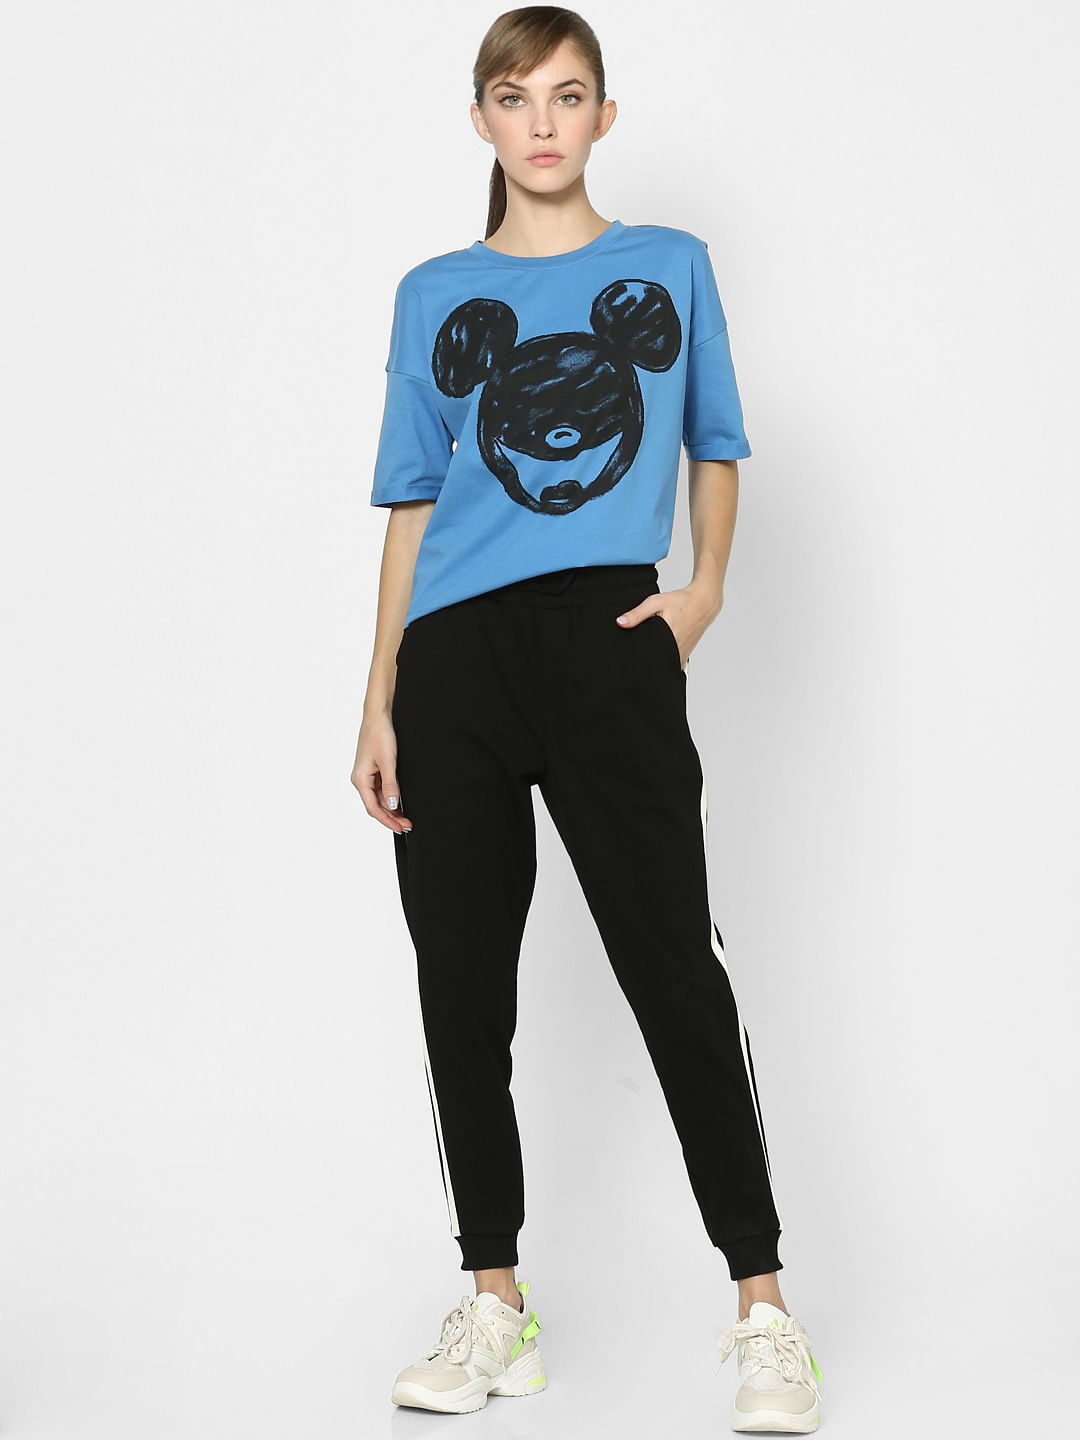 Blue Graphic Print T-Shirt for Women